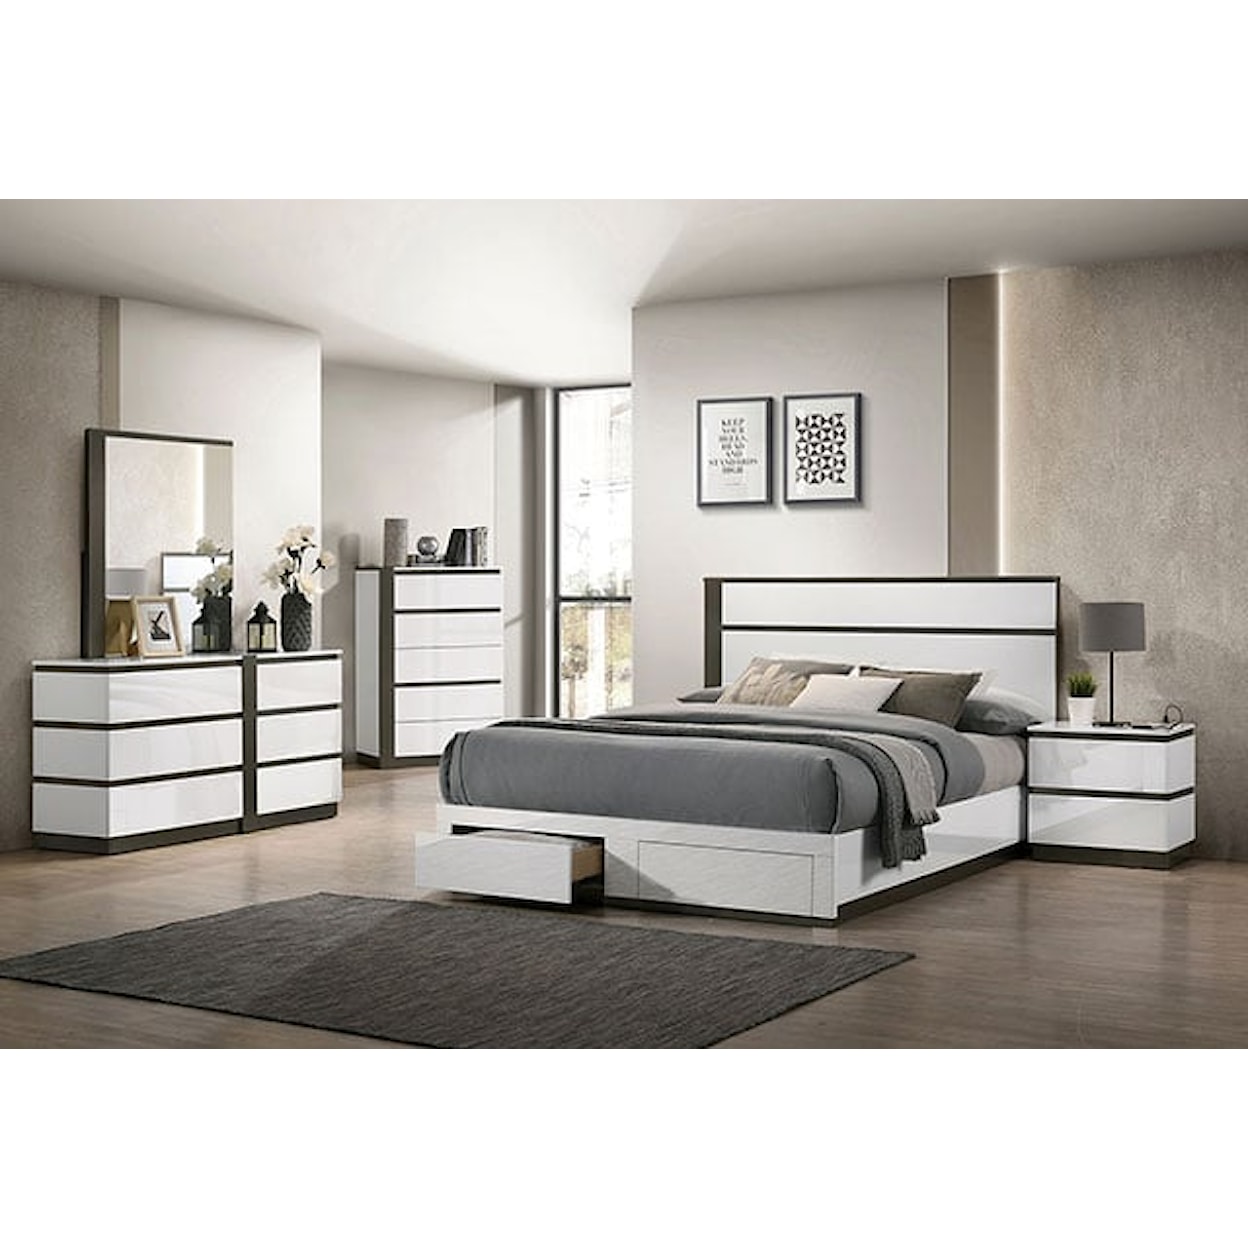 Furniture of America Birsfelden Cal. King Storage Bedroom Set